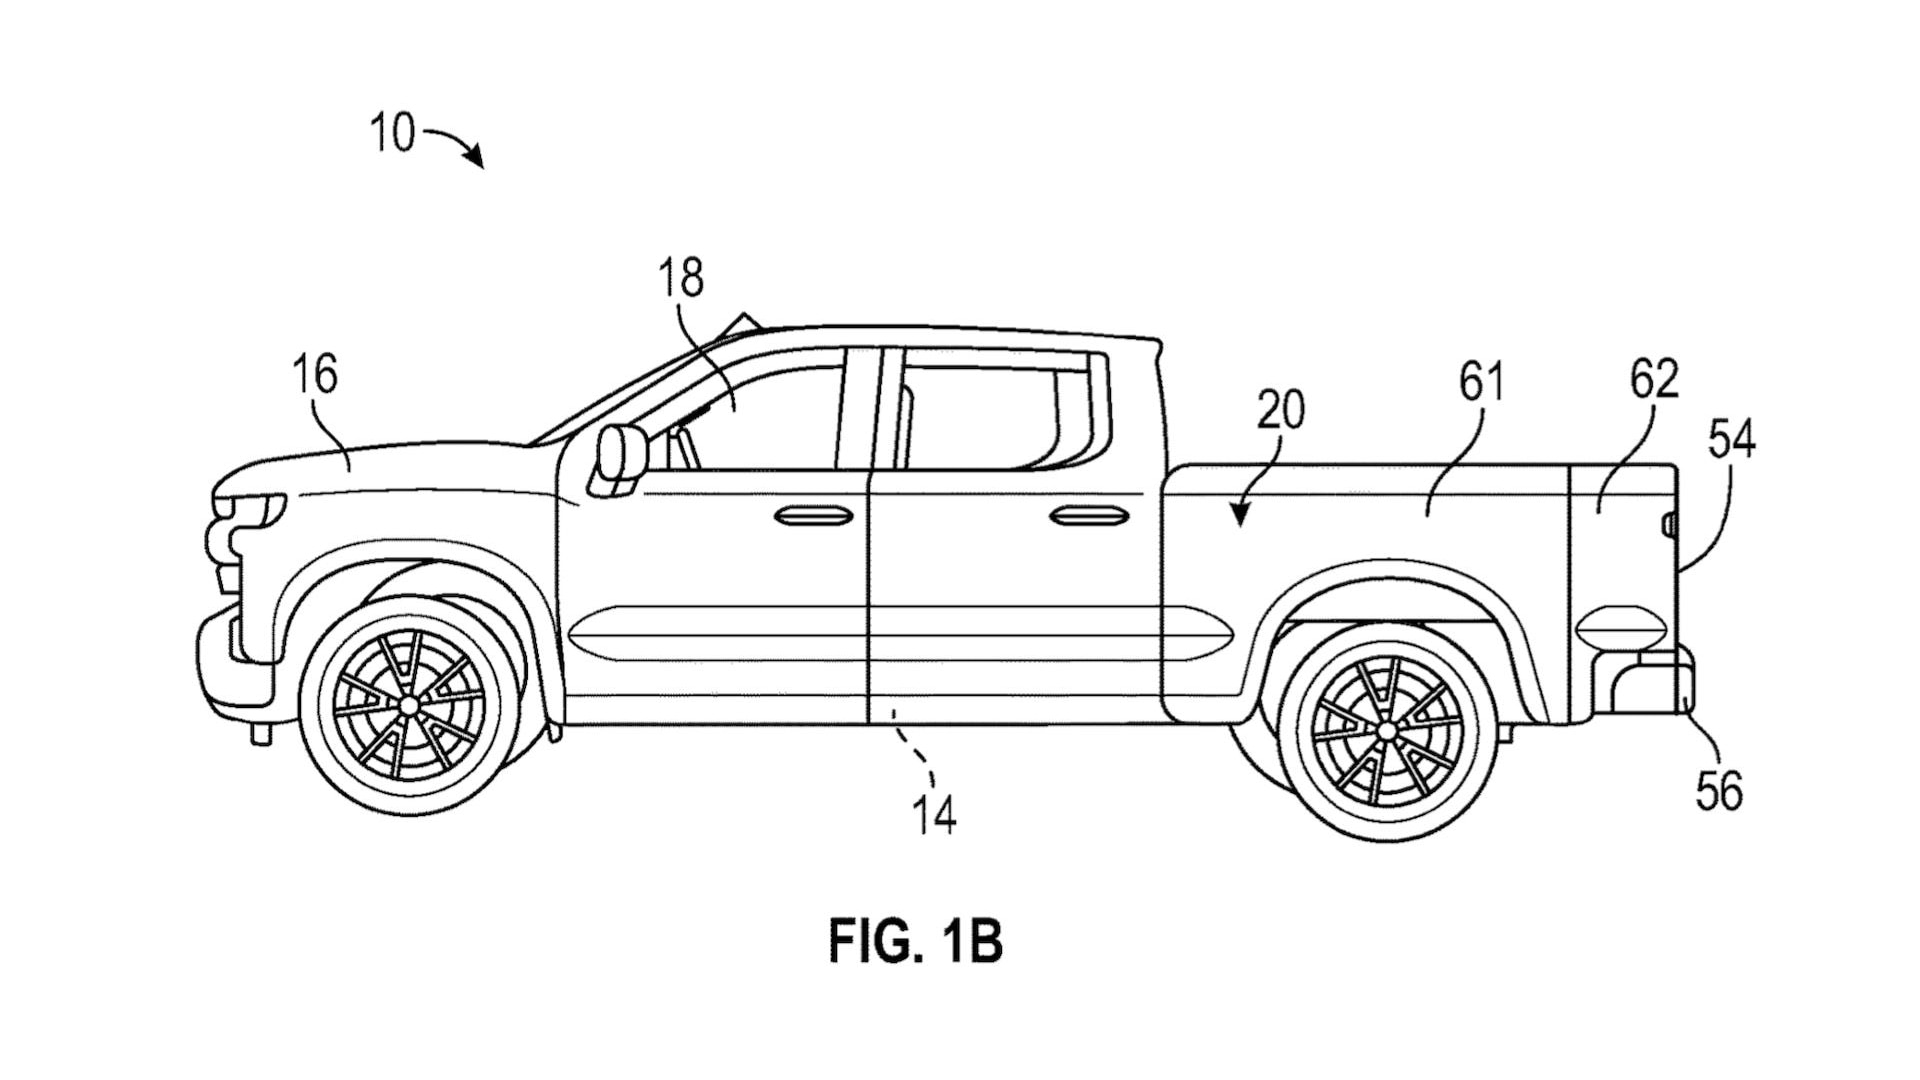 General Motors dynamic cargo box patent image